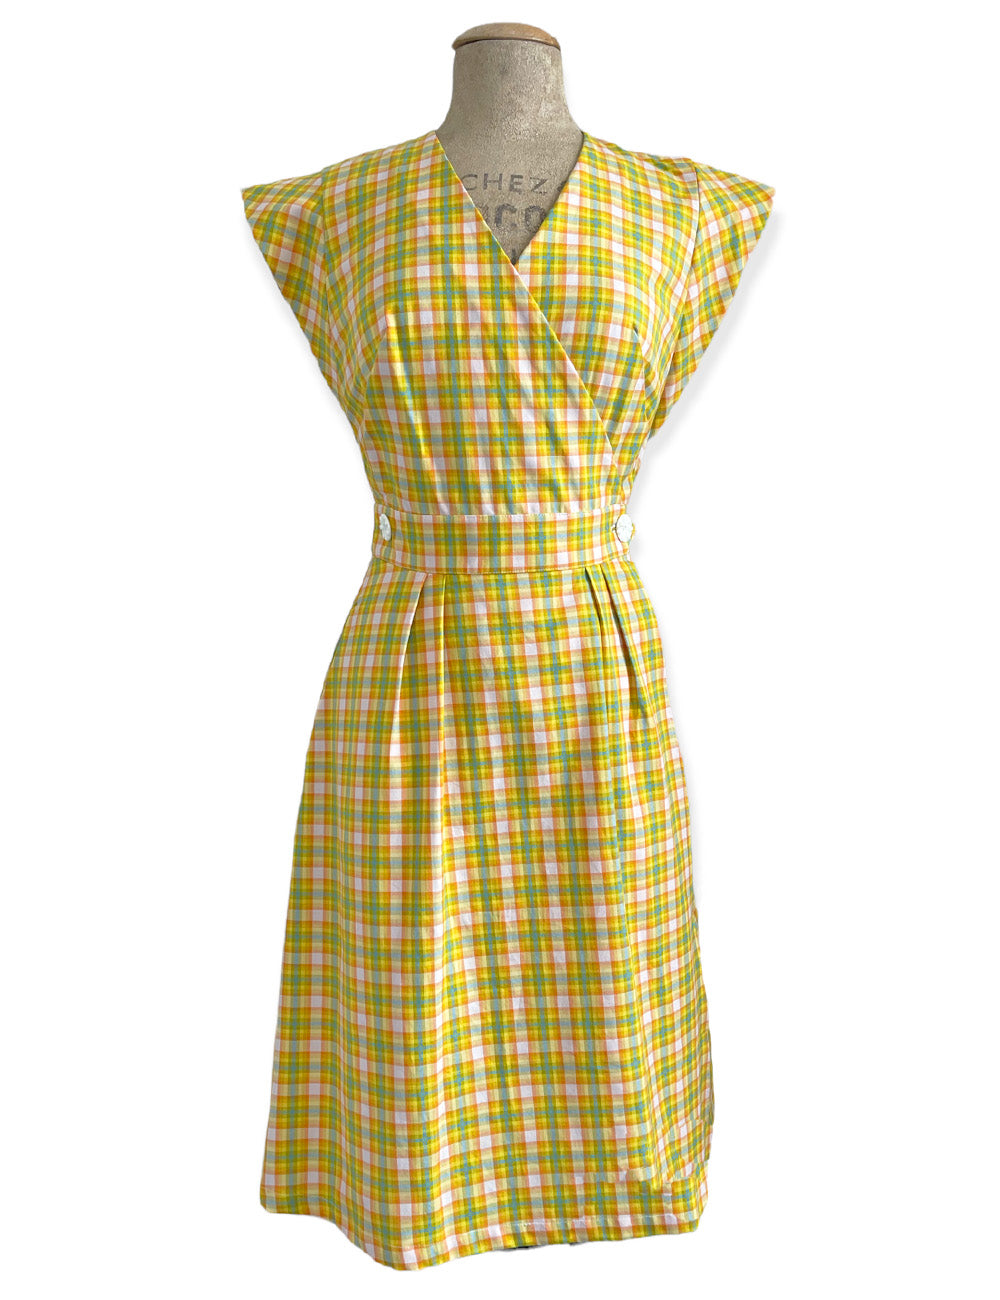 FINAL SALE - Scout for Loco Lindo - 1940s Colorful Pastel Plaid Garden Wrap Dress